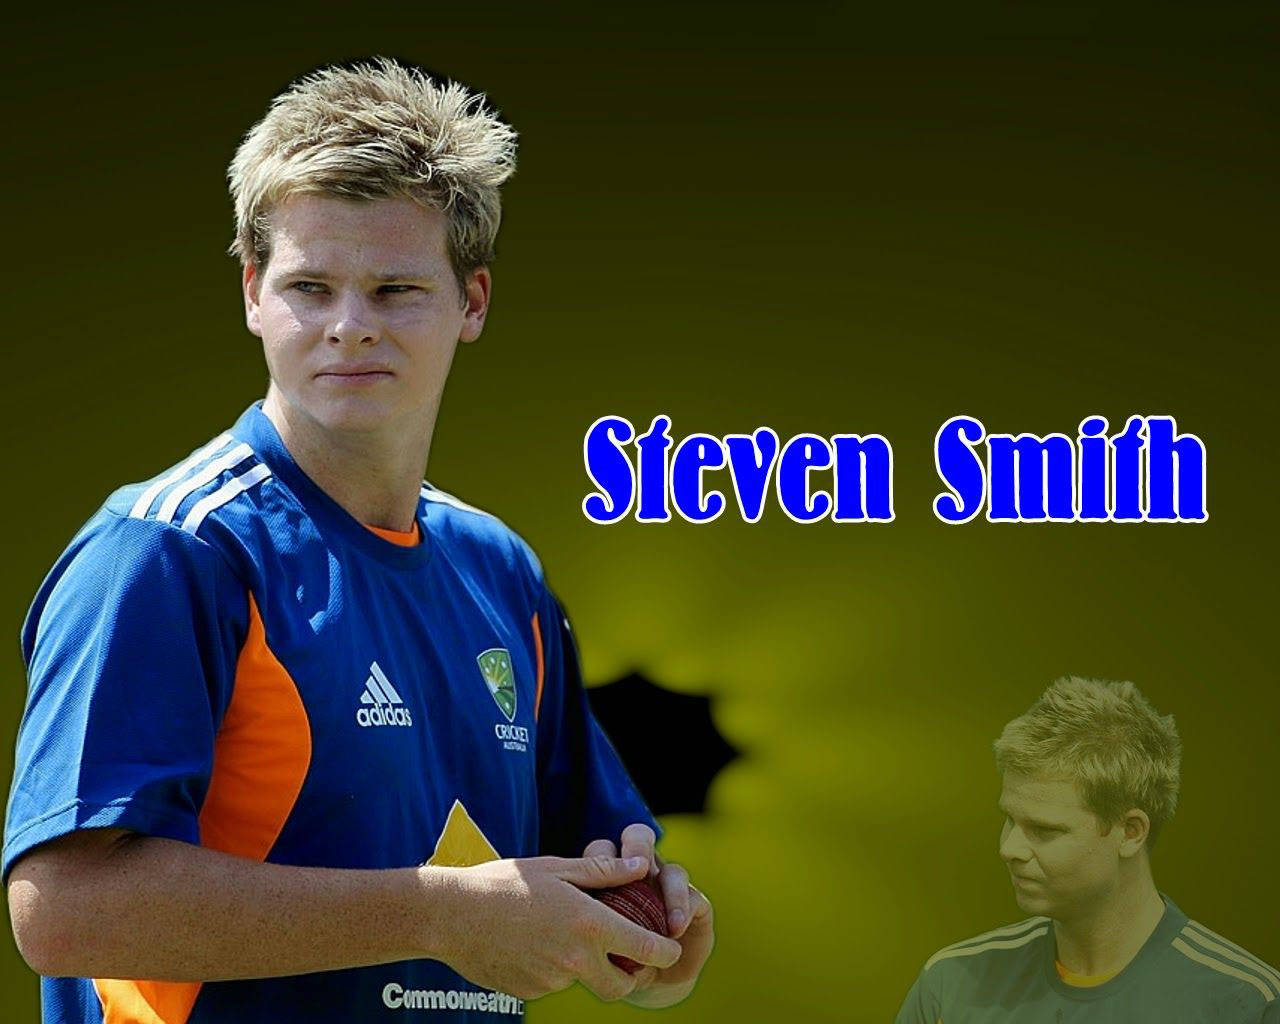 Steve Smith Australian Cricketer Background